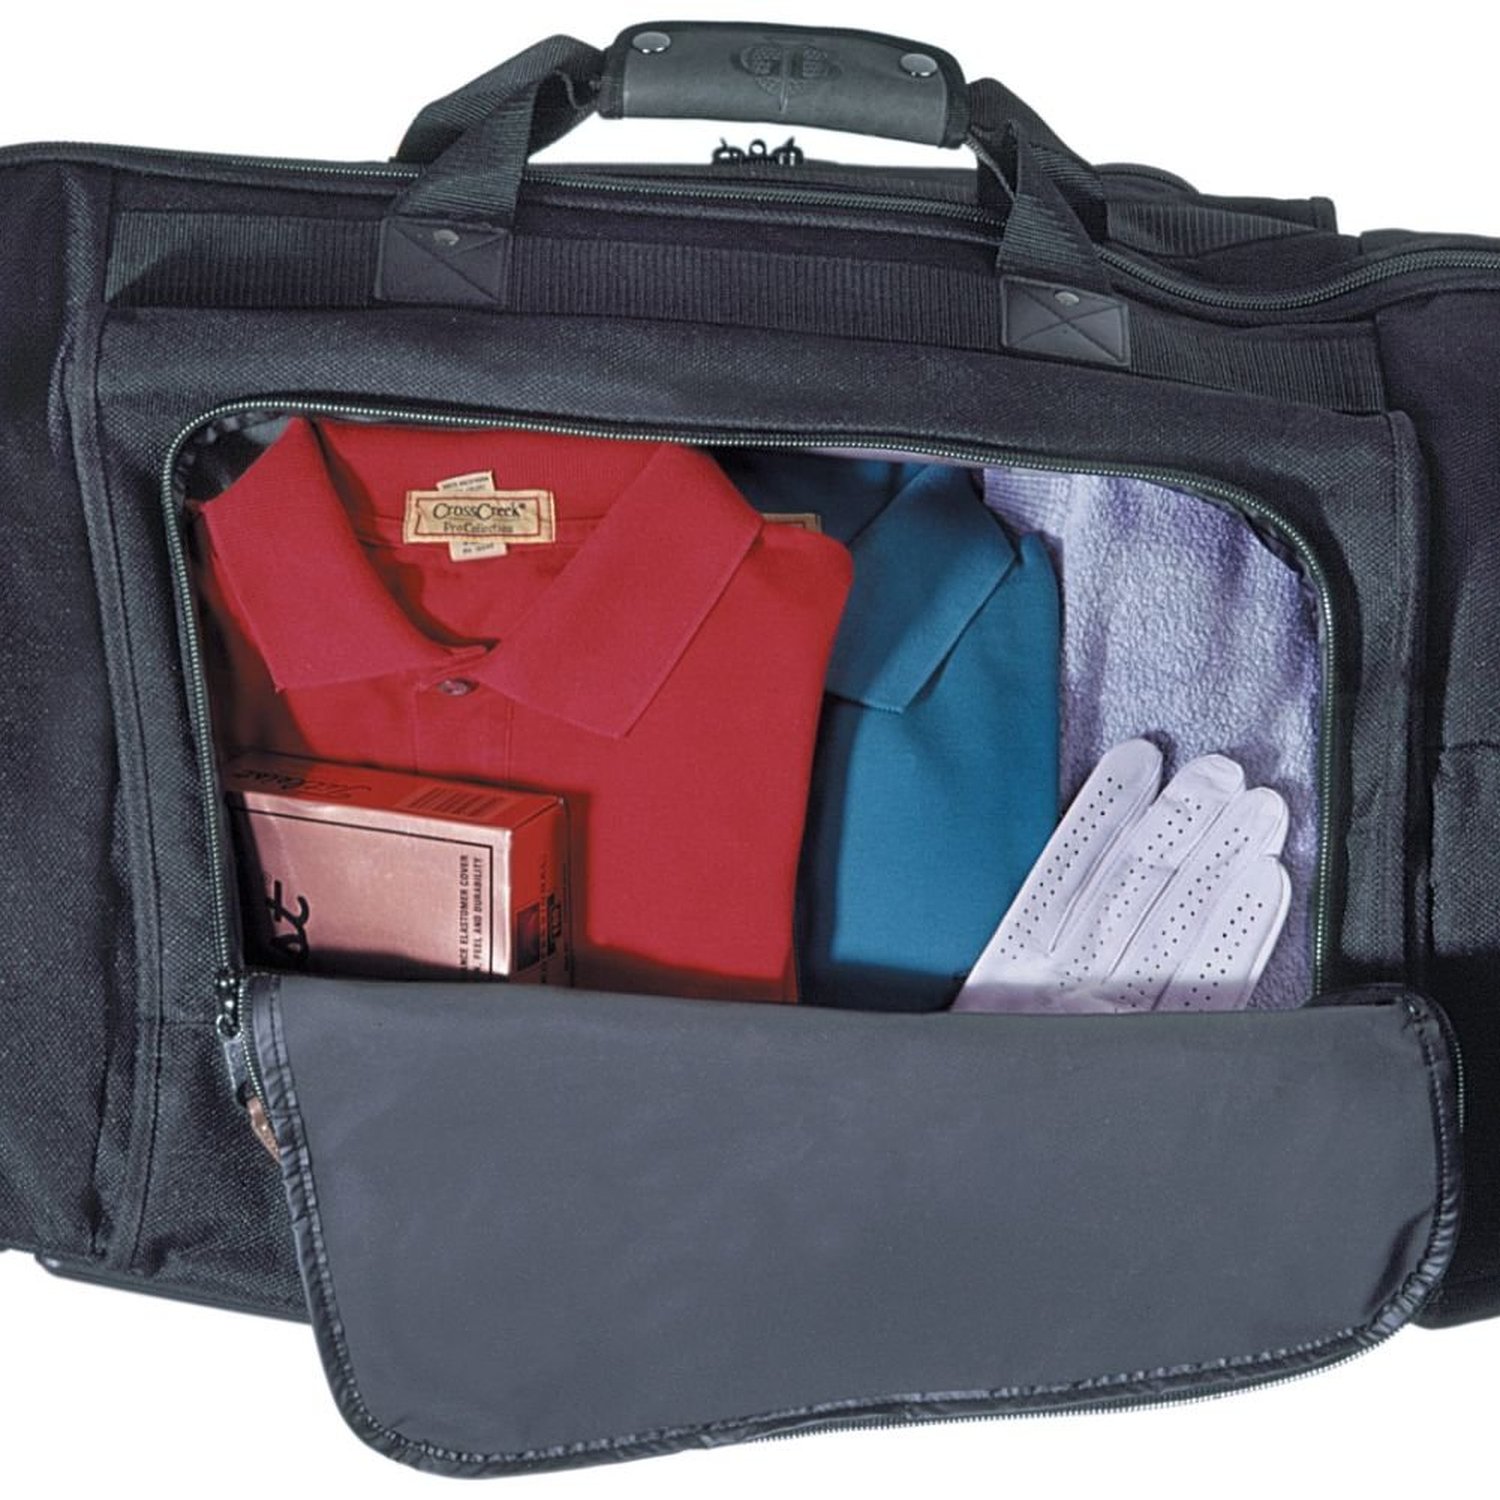 Golf Travel Bags LLC Medallion 4.0 Golf Bag with Wheels